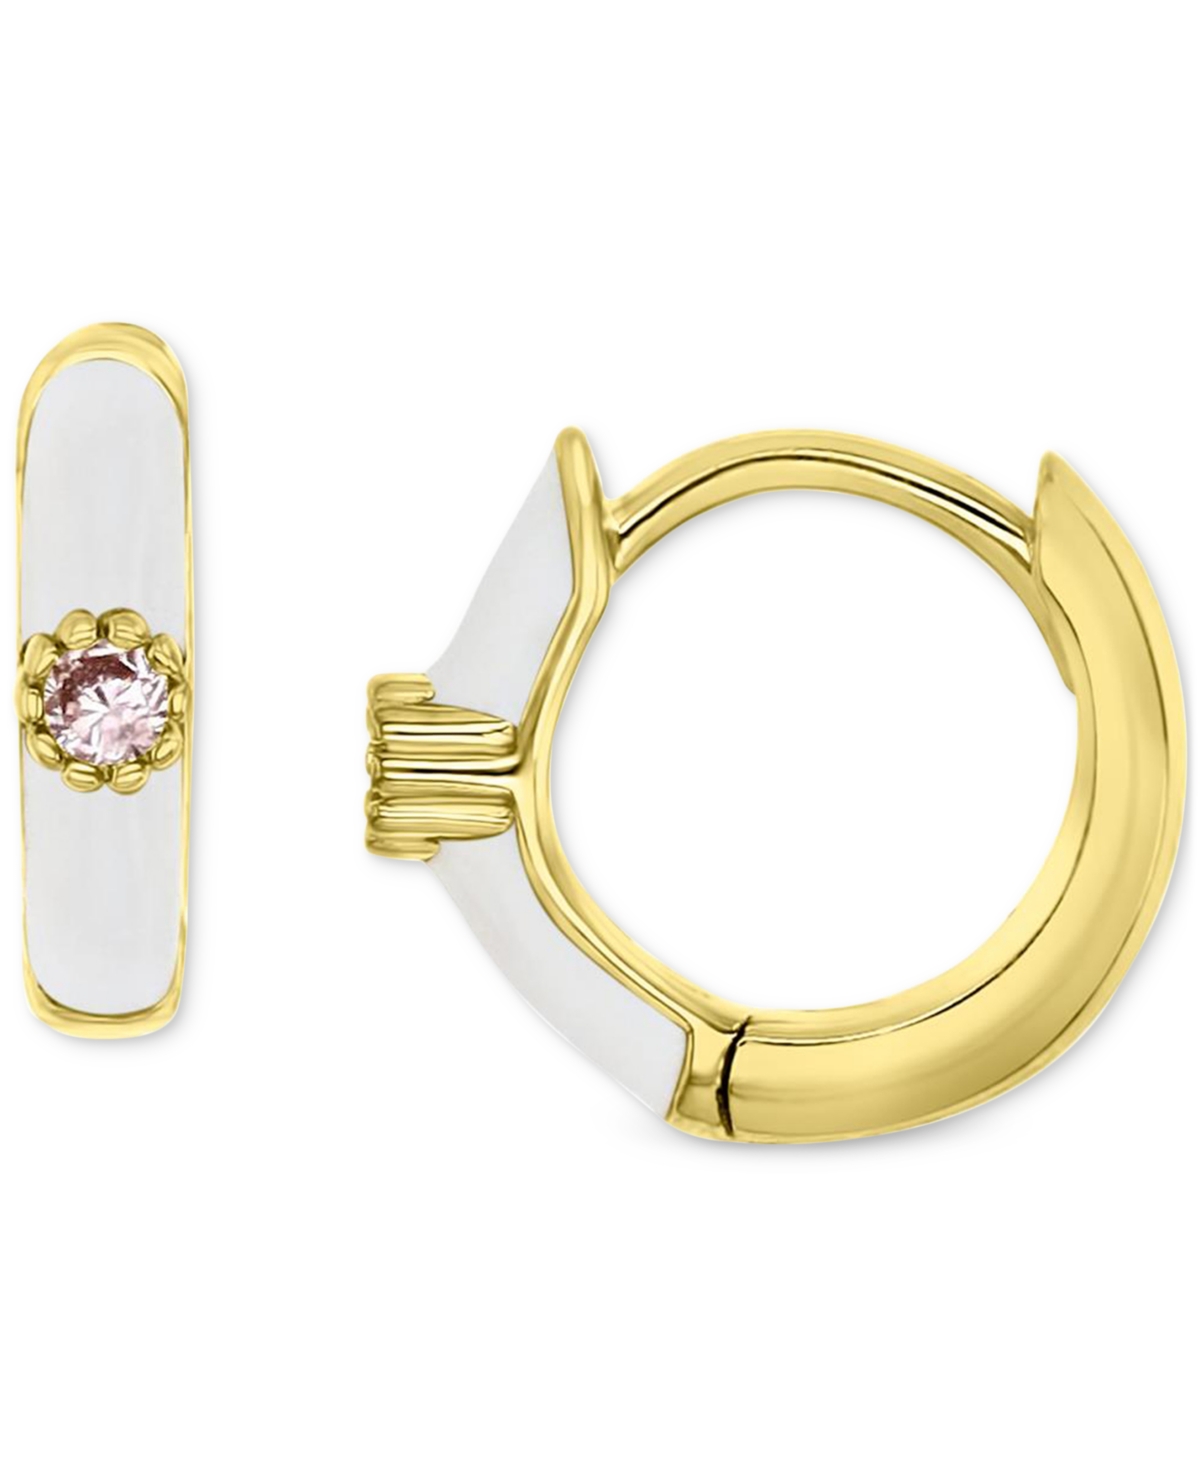 Cubic Zirconia & Enamel Small Hoop Earrings in 14k Gold-Plated Sterling Silver, 0.59" - Pink